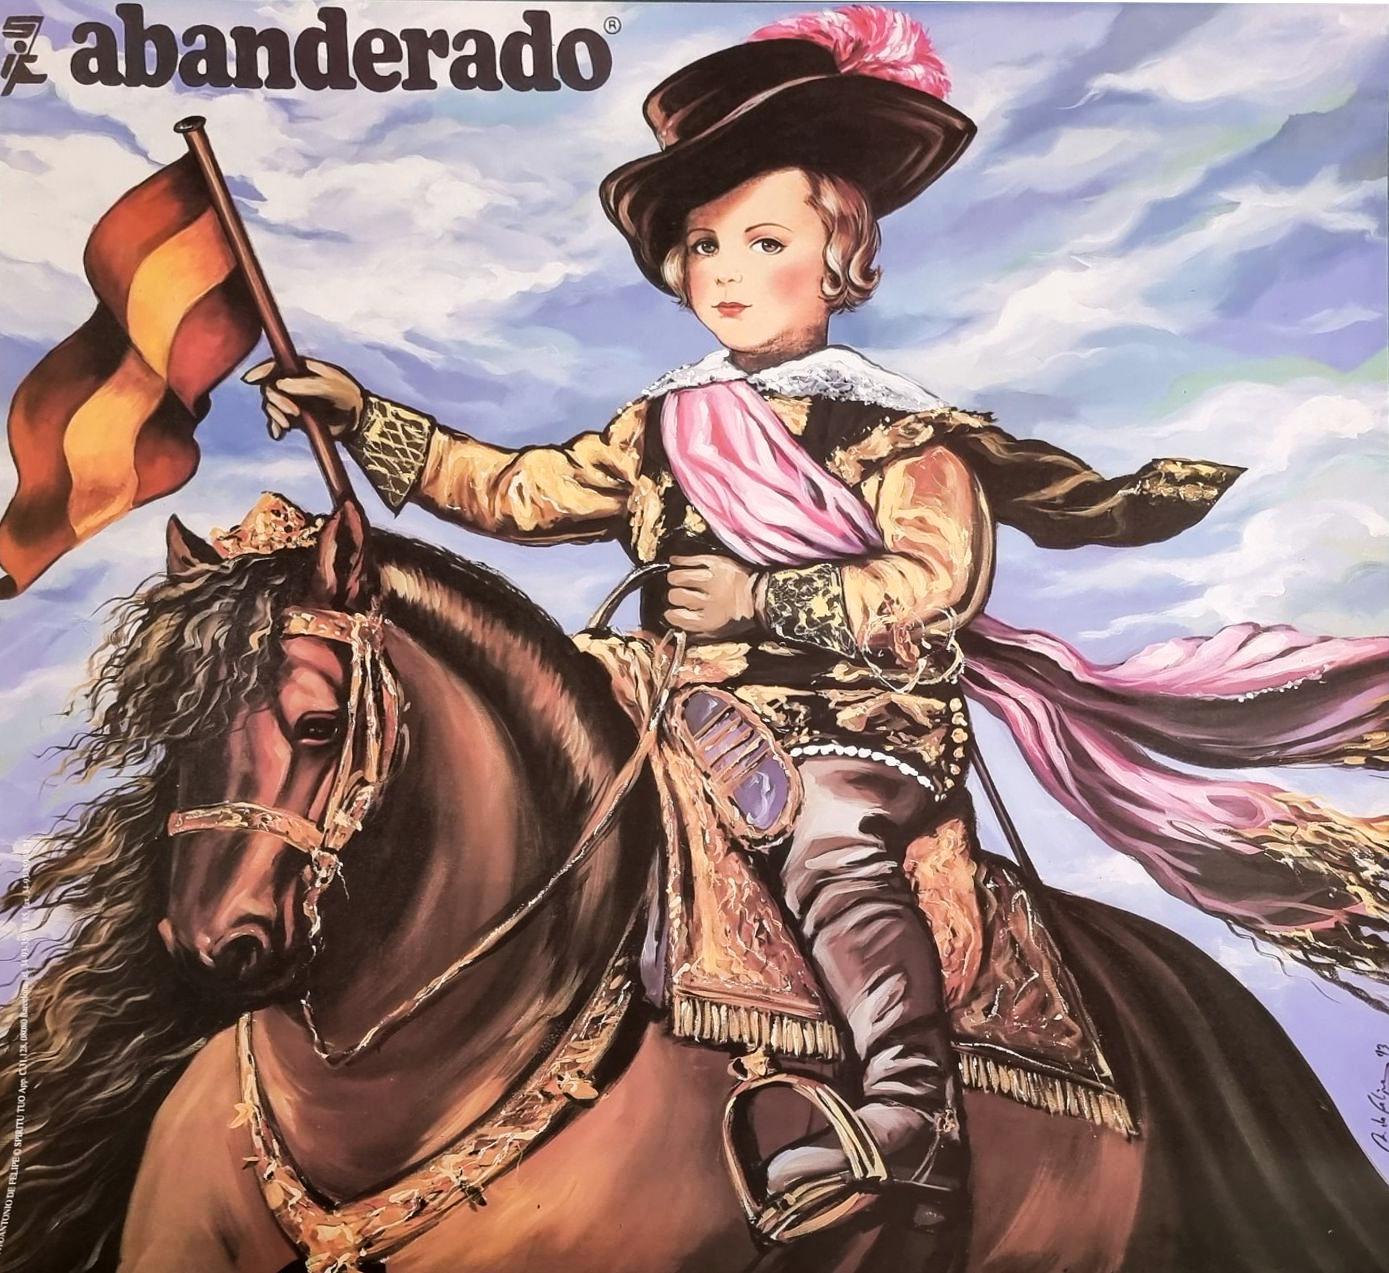 Antonio de Felipe Figurative Print - Abanderado (Iconic, Spanish, Baroque, Large)